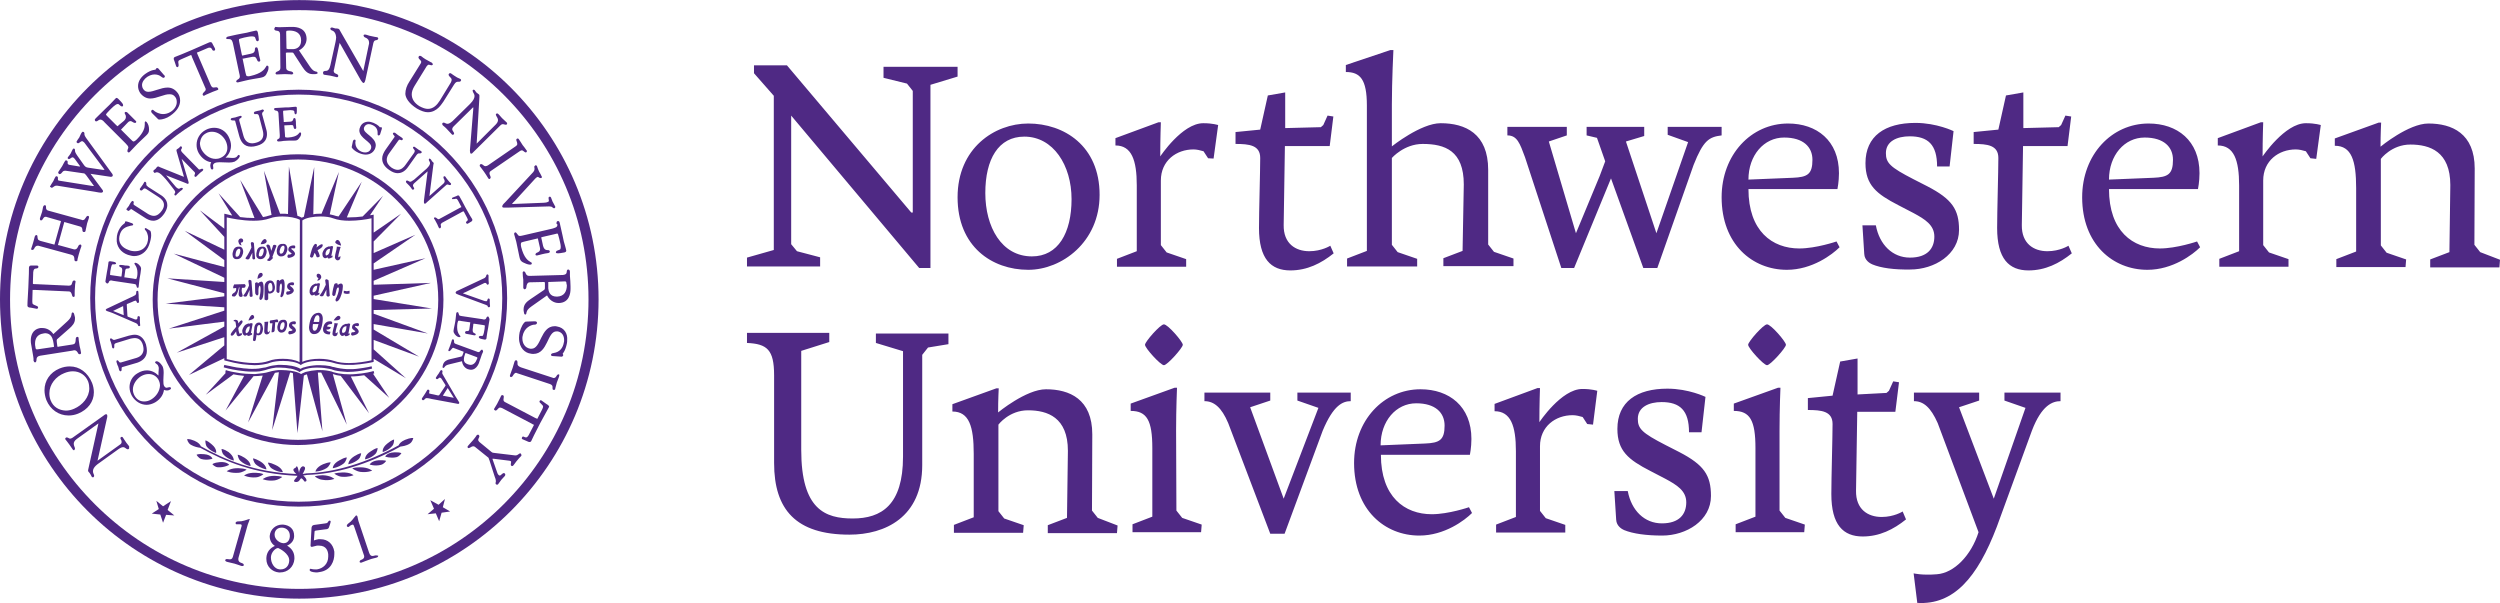  Northwestern University logo in purple 